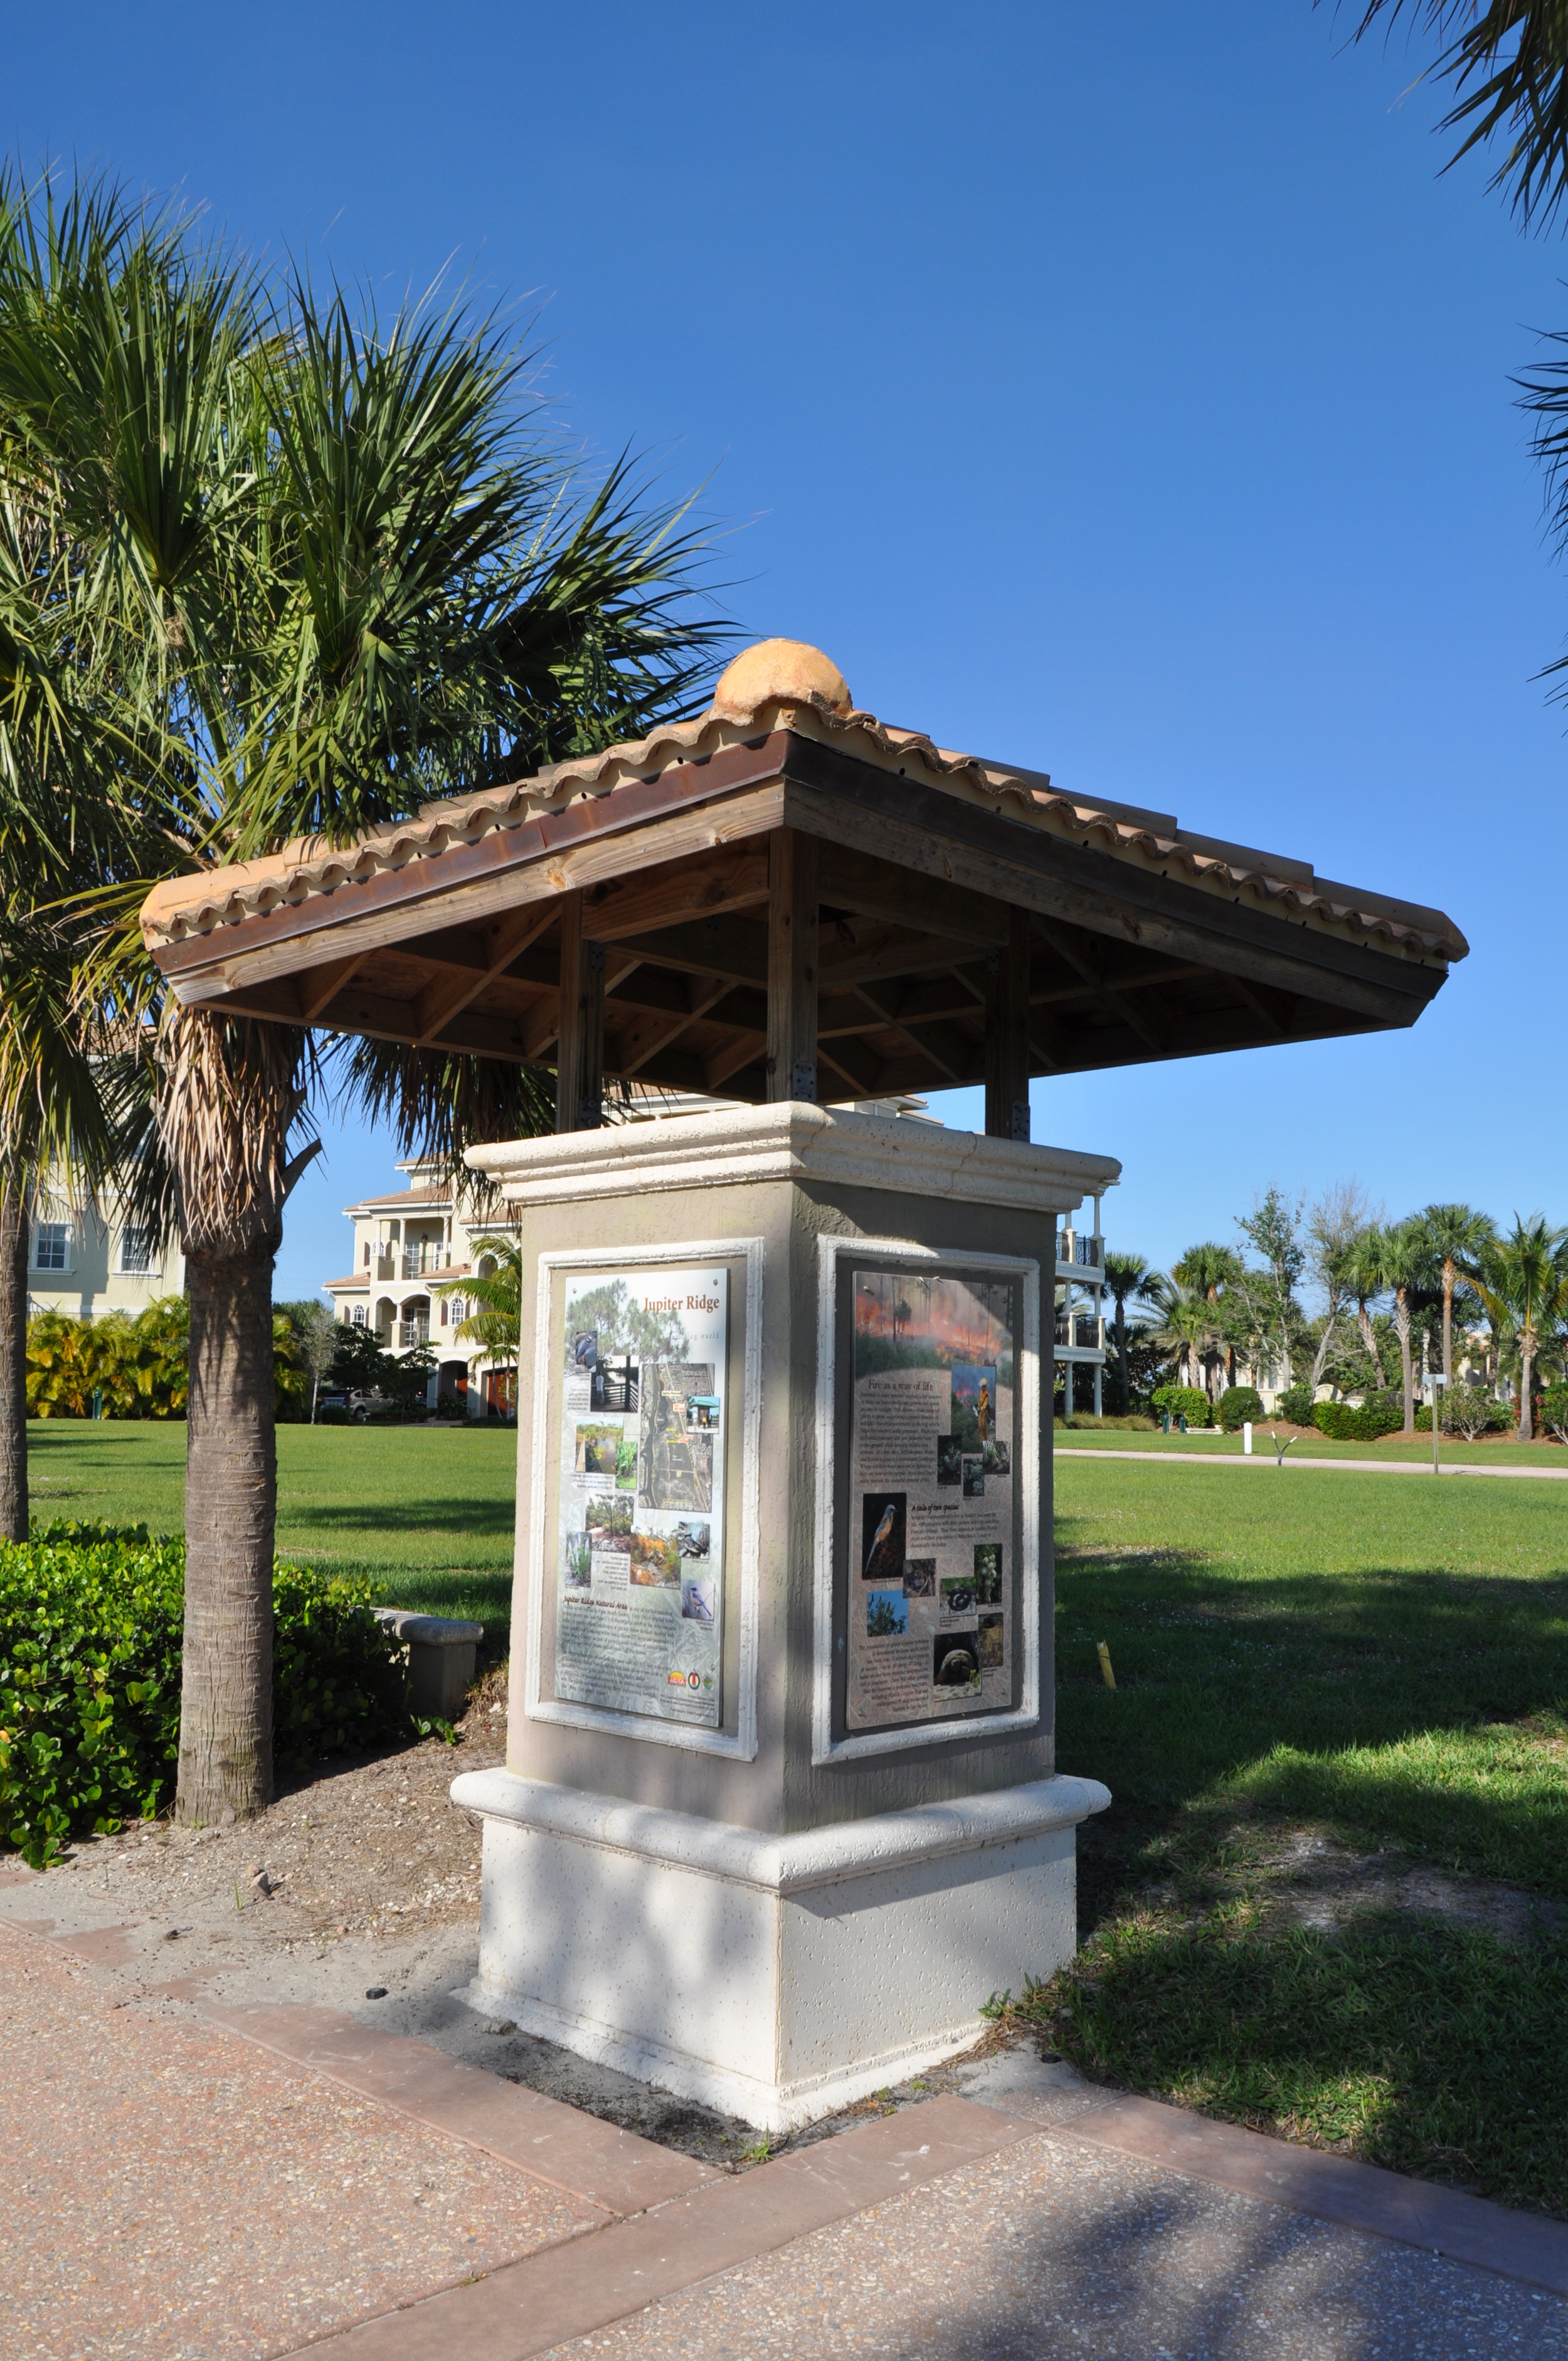 Tierra Del Sol Jupiter Florida Riverwalk Kiosk Interpretive Signage.JPG